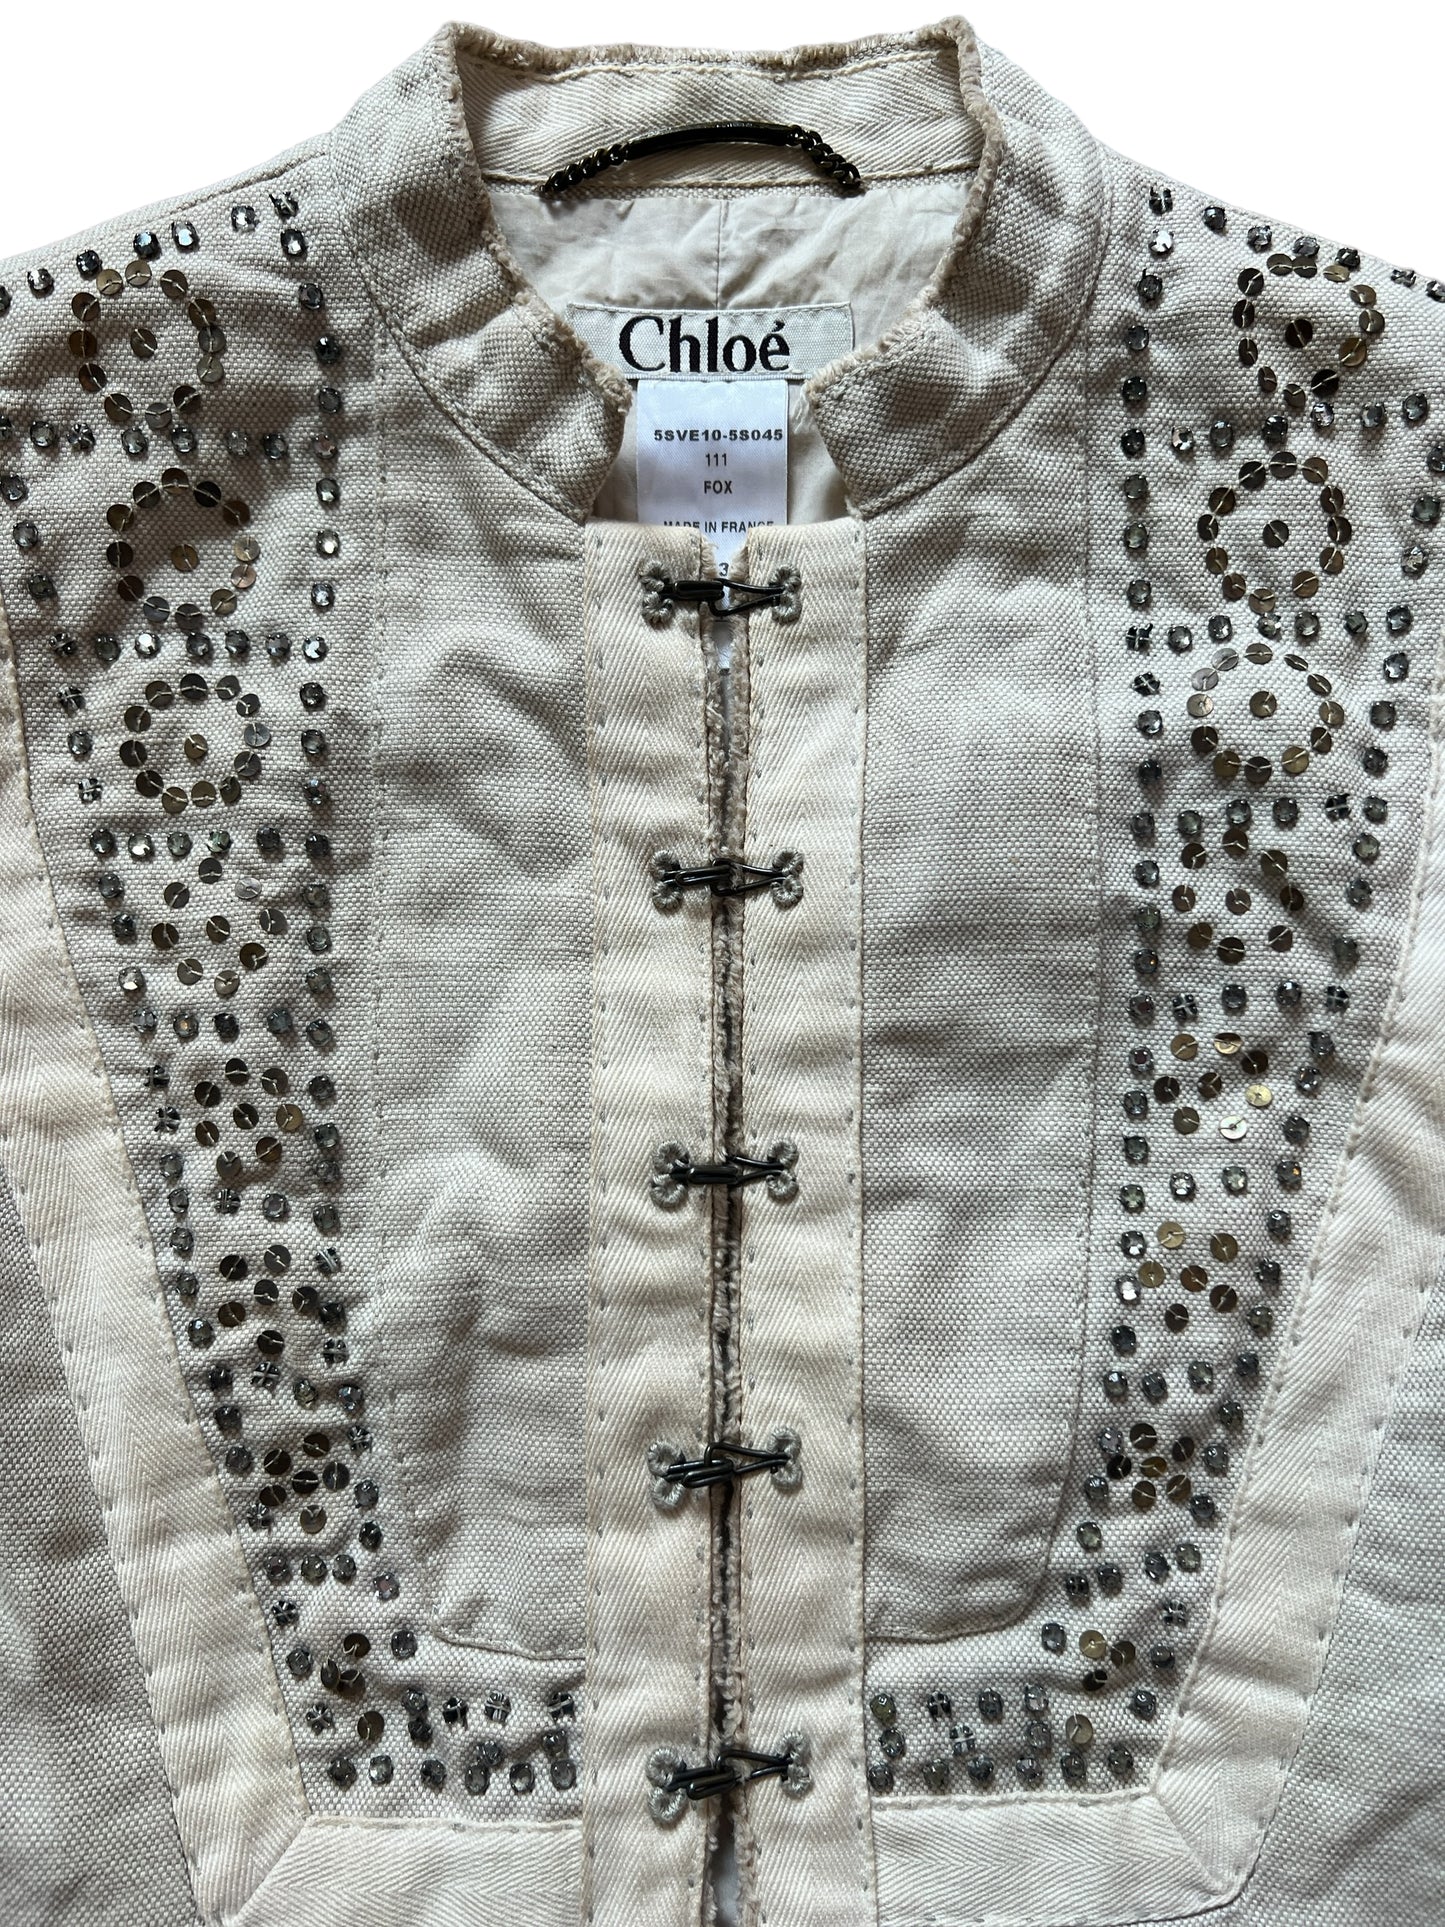 Chloé by Phoebe Philo 2005 Embellished Canvas Jacket